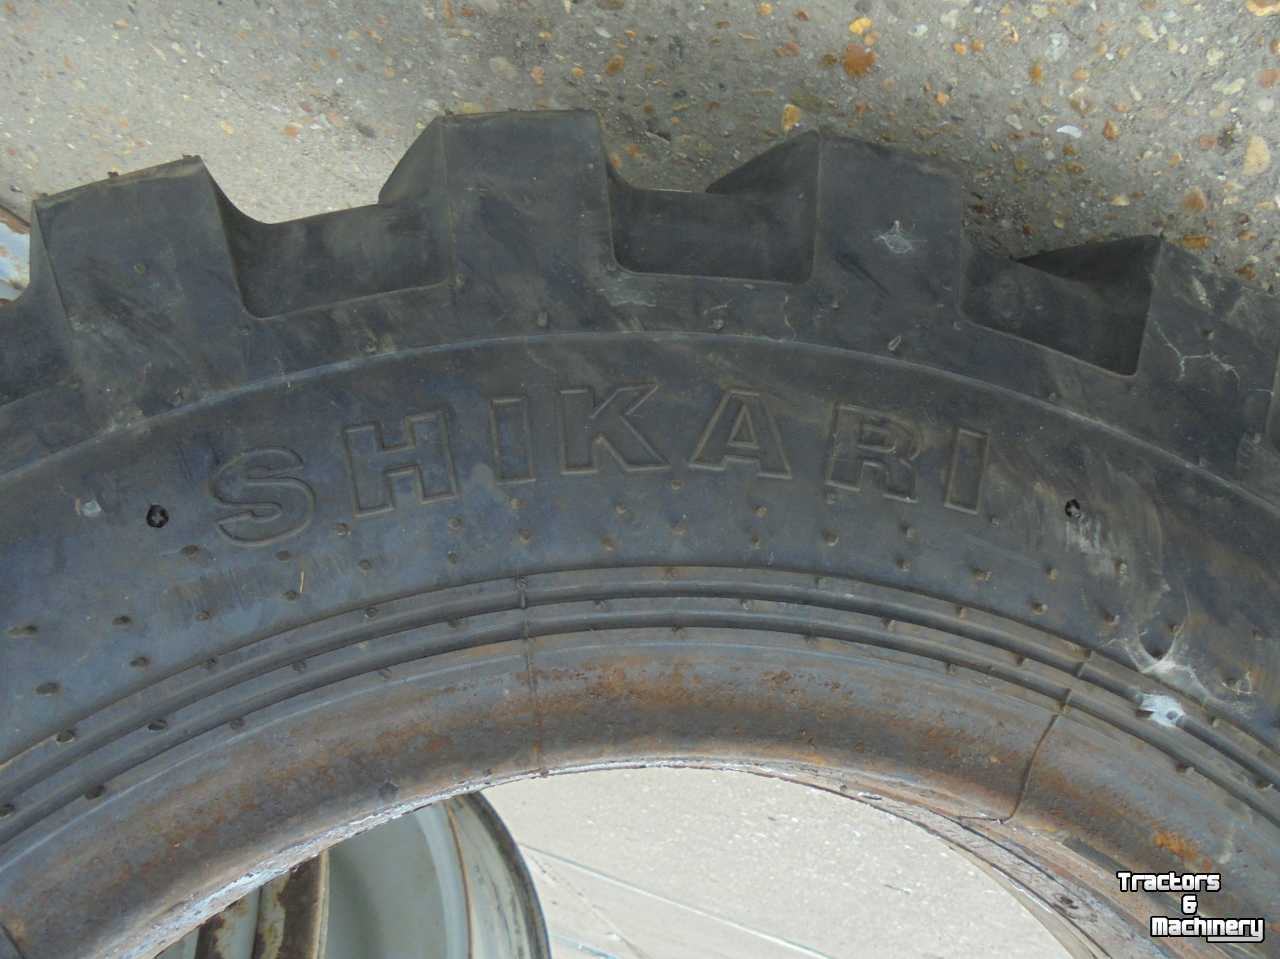 Wheels, Tyres, Rims & Dual spacers  7.50-20 Boka Terra/Shikari 14 ply SKL800 Bagger kraanband grondverzetband